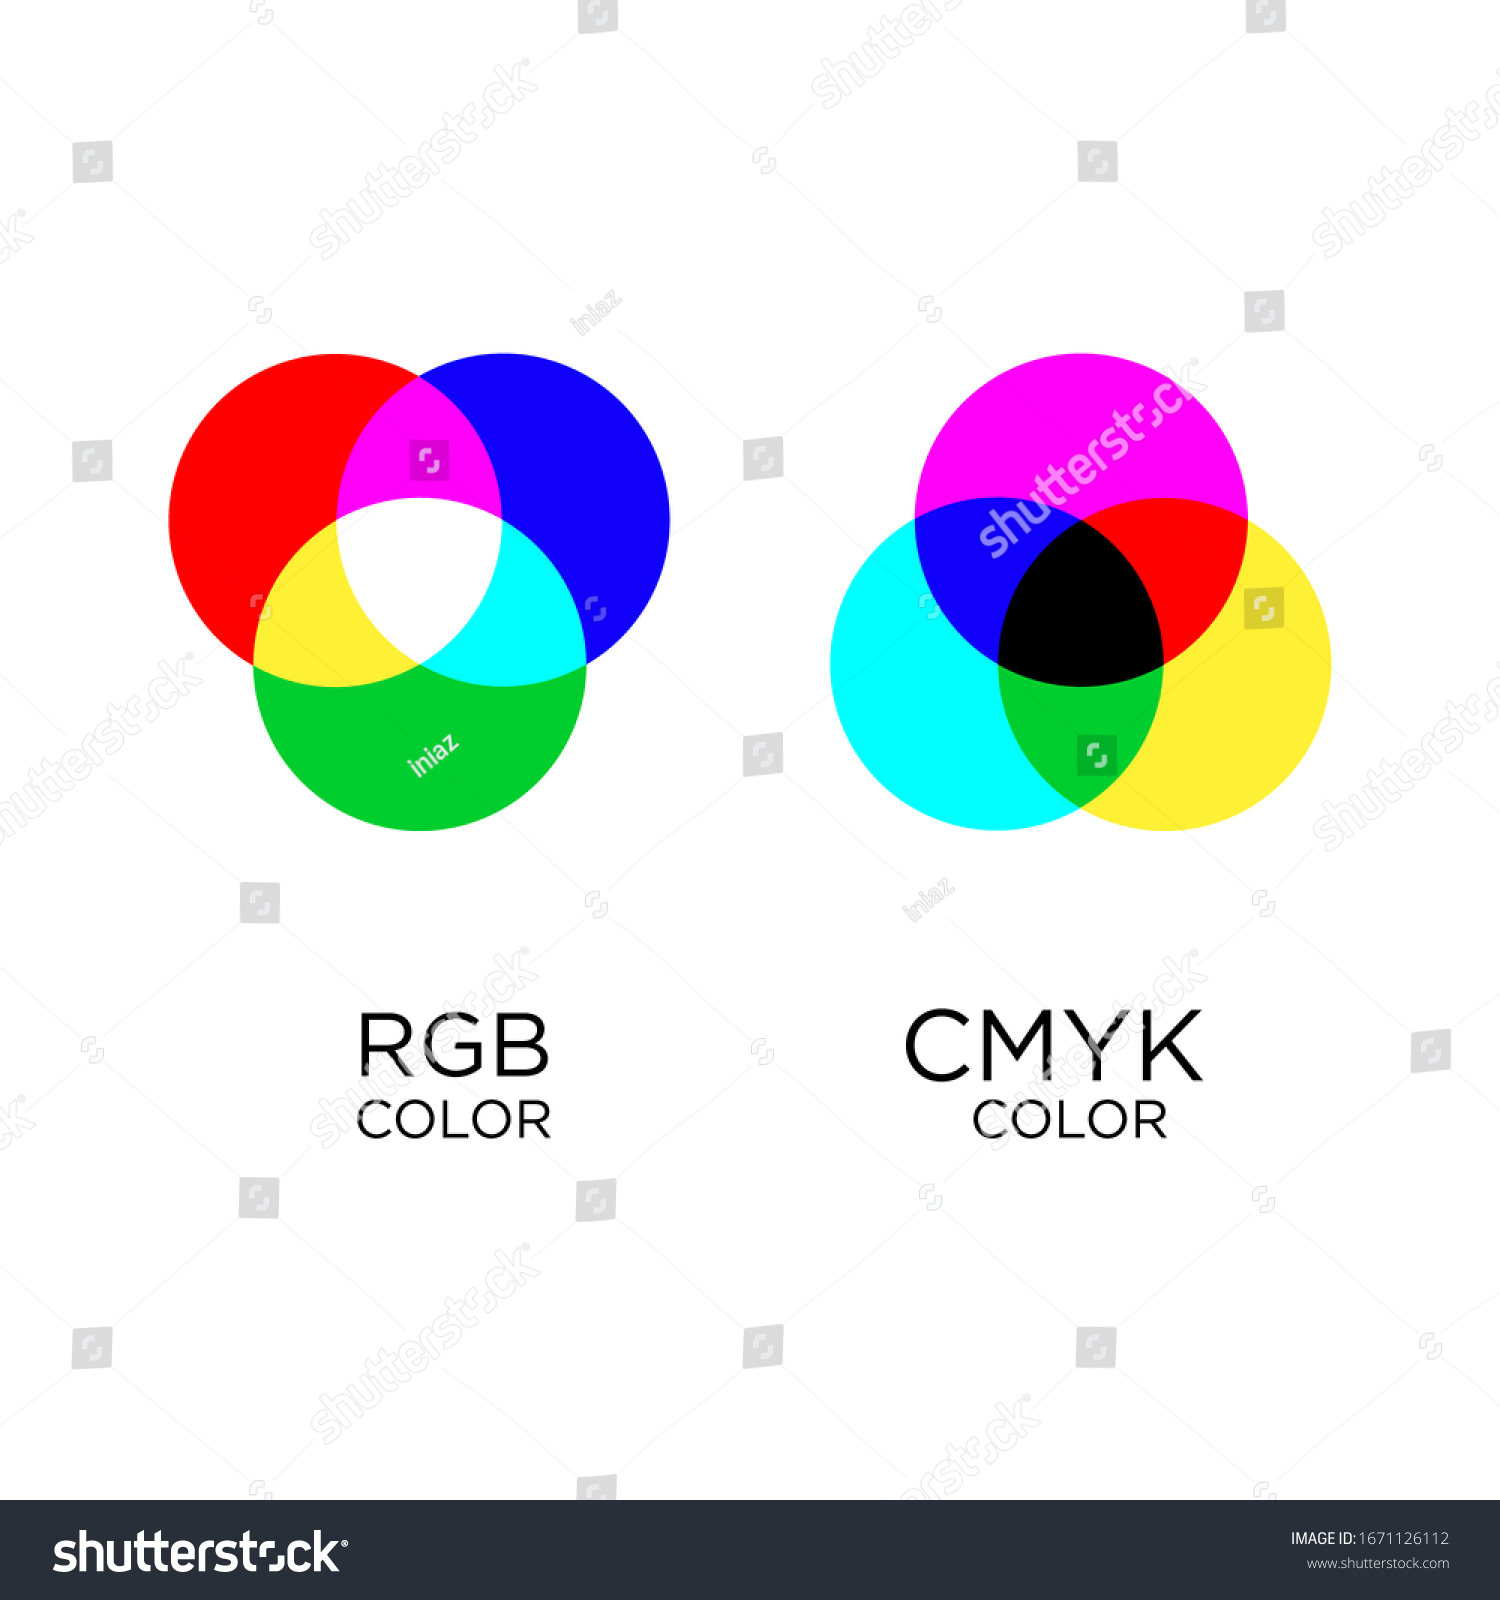 CMYK vs RGB color model concept illustration. vector infographic for education #1671126112